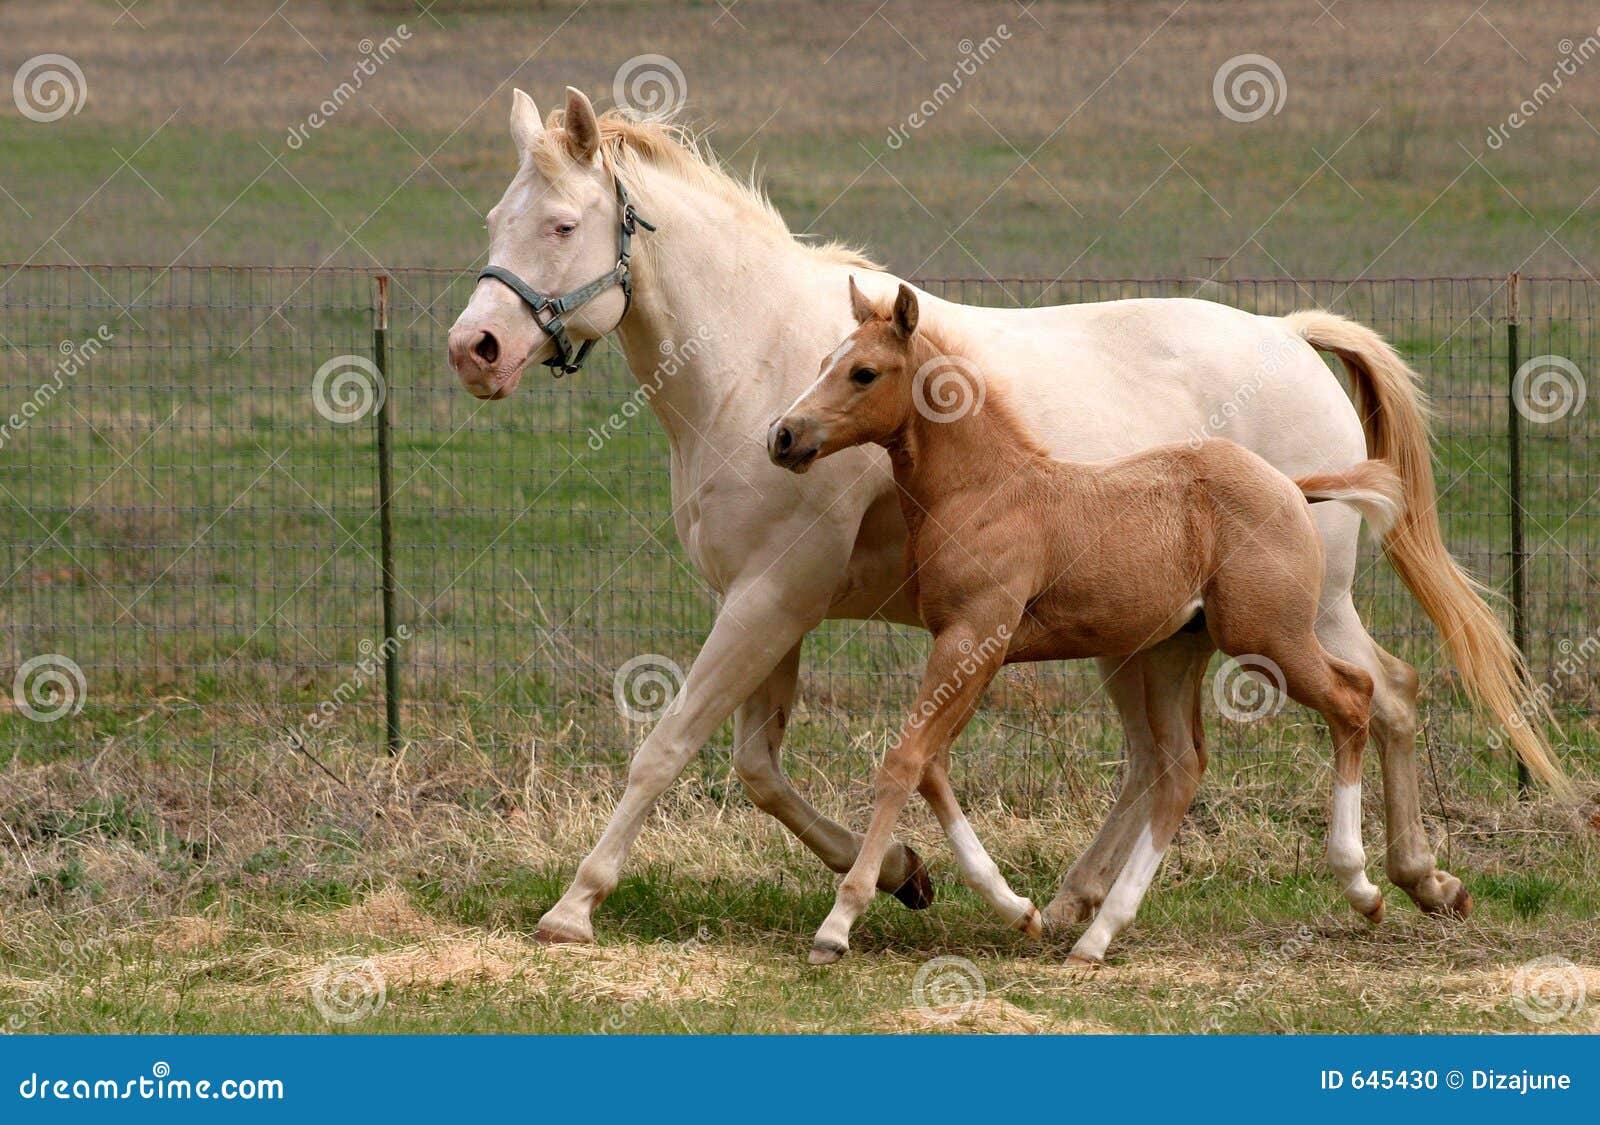 mare & foal trotting